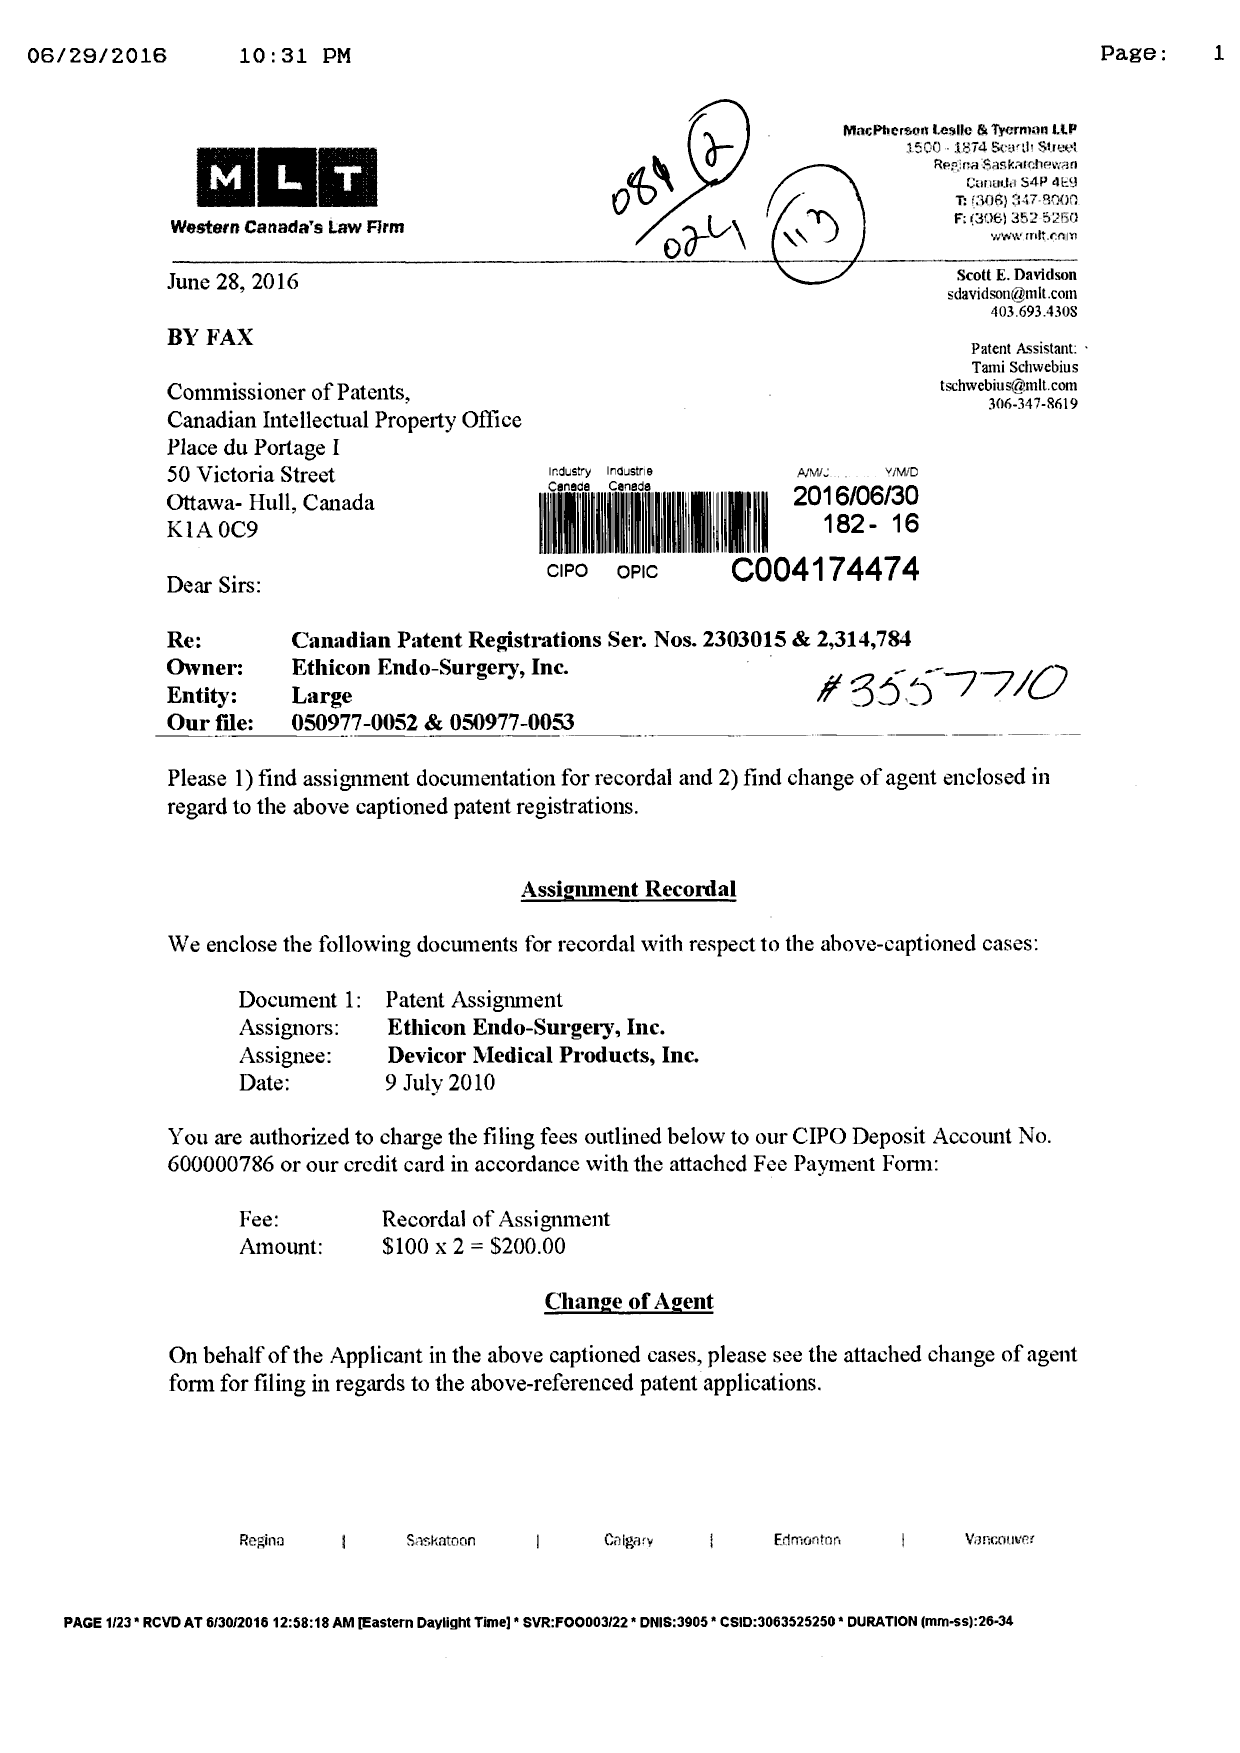 Canadian Patent Document 2597847. Correspondence 20160630. Image 1 of 8